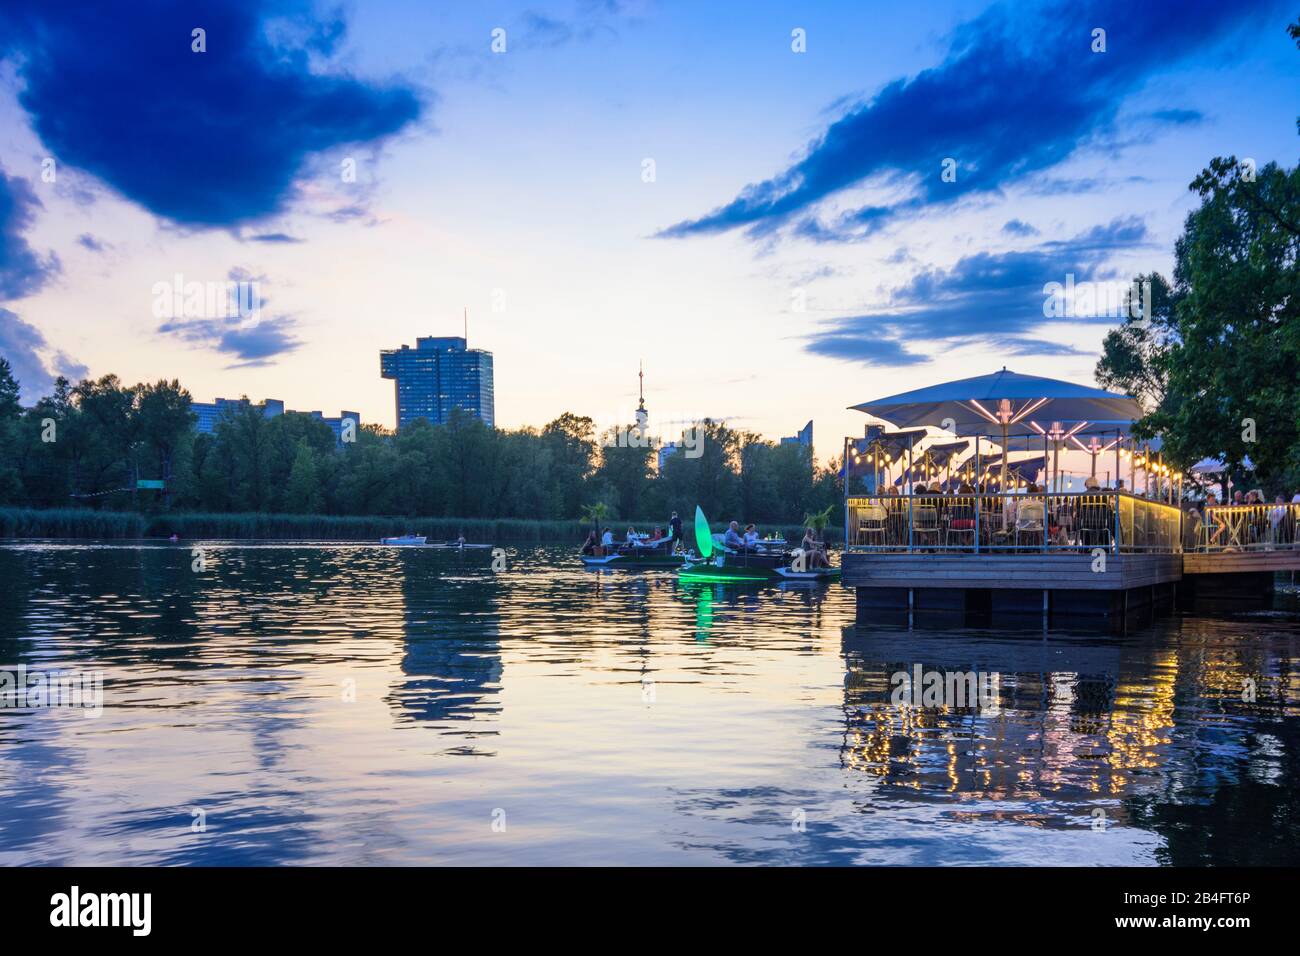 Wien / Vienna, oxbow lake river Alte Donau (Old Danube), sunset, wooden platform, people, floating restaurant, boat in 22. Donaustadt, Wien, Austria Stock Photo